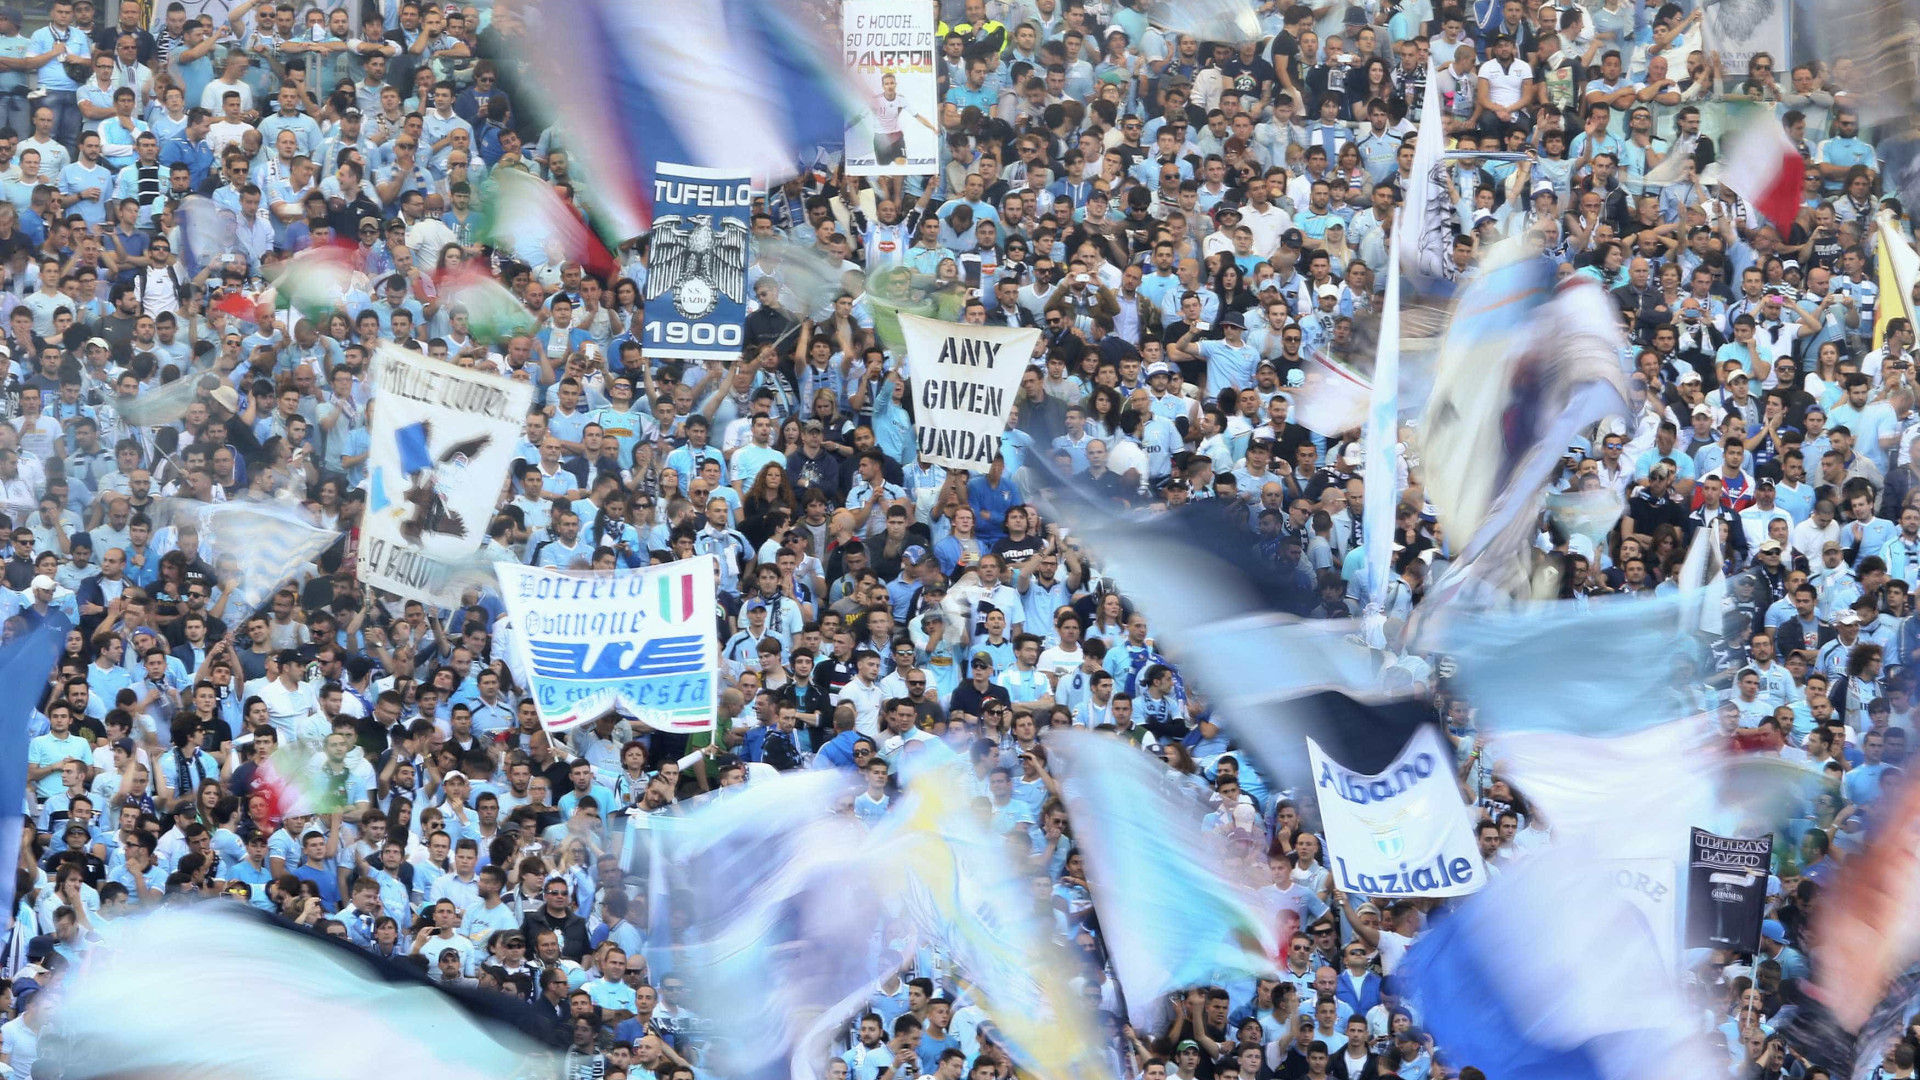 Uefa pune Lazio por comportamento racista de seus torcedores